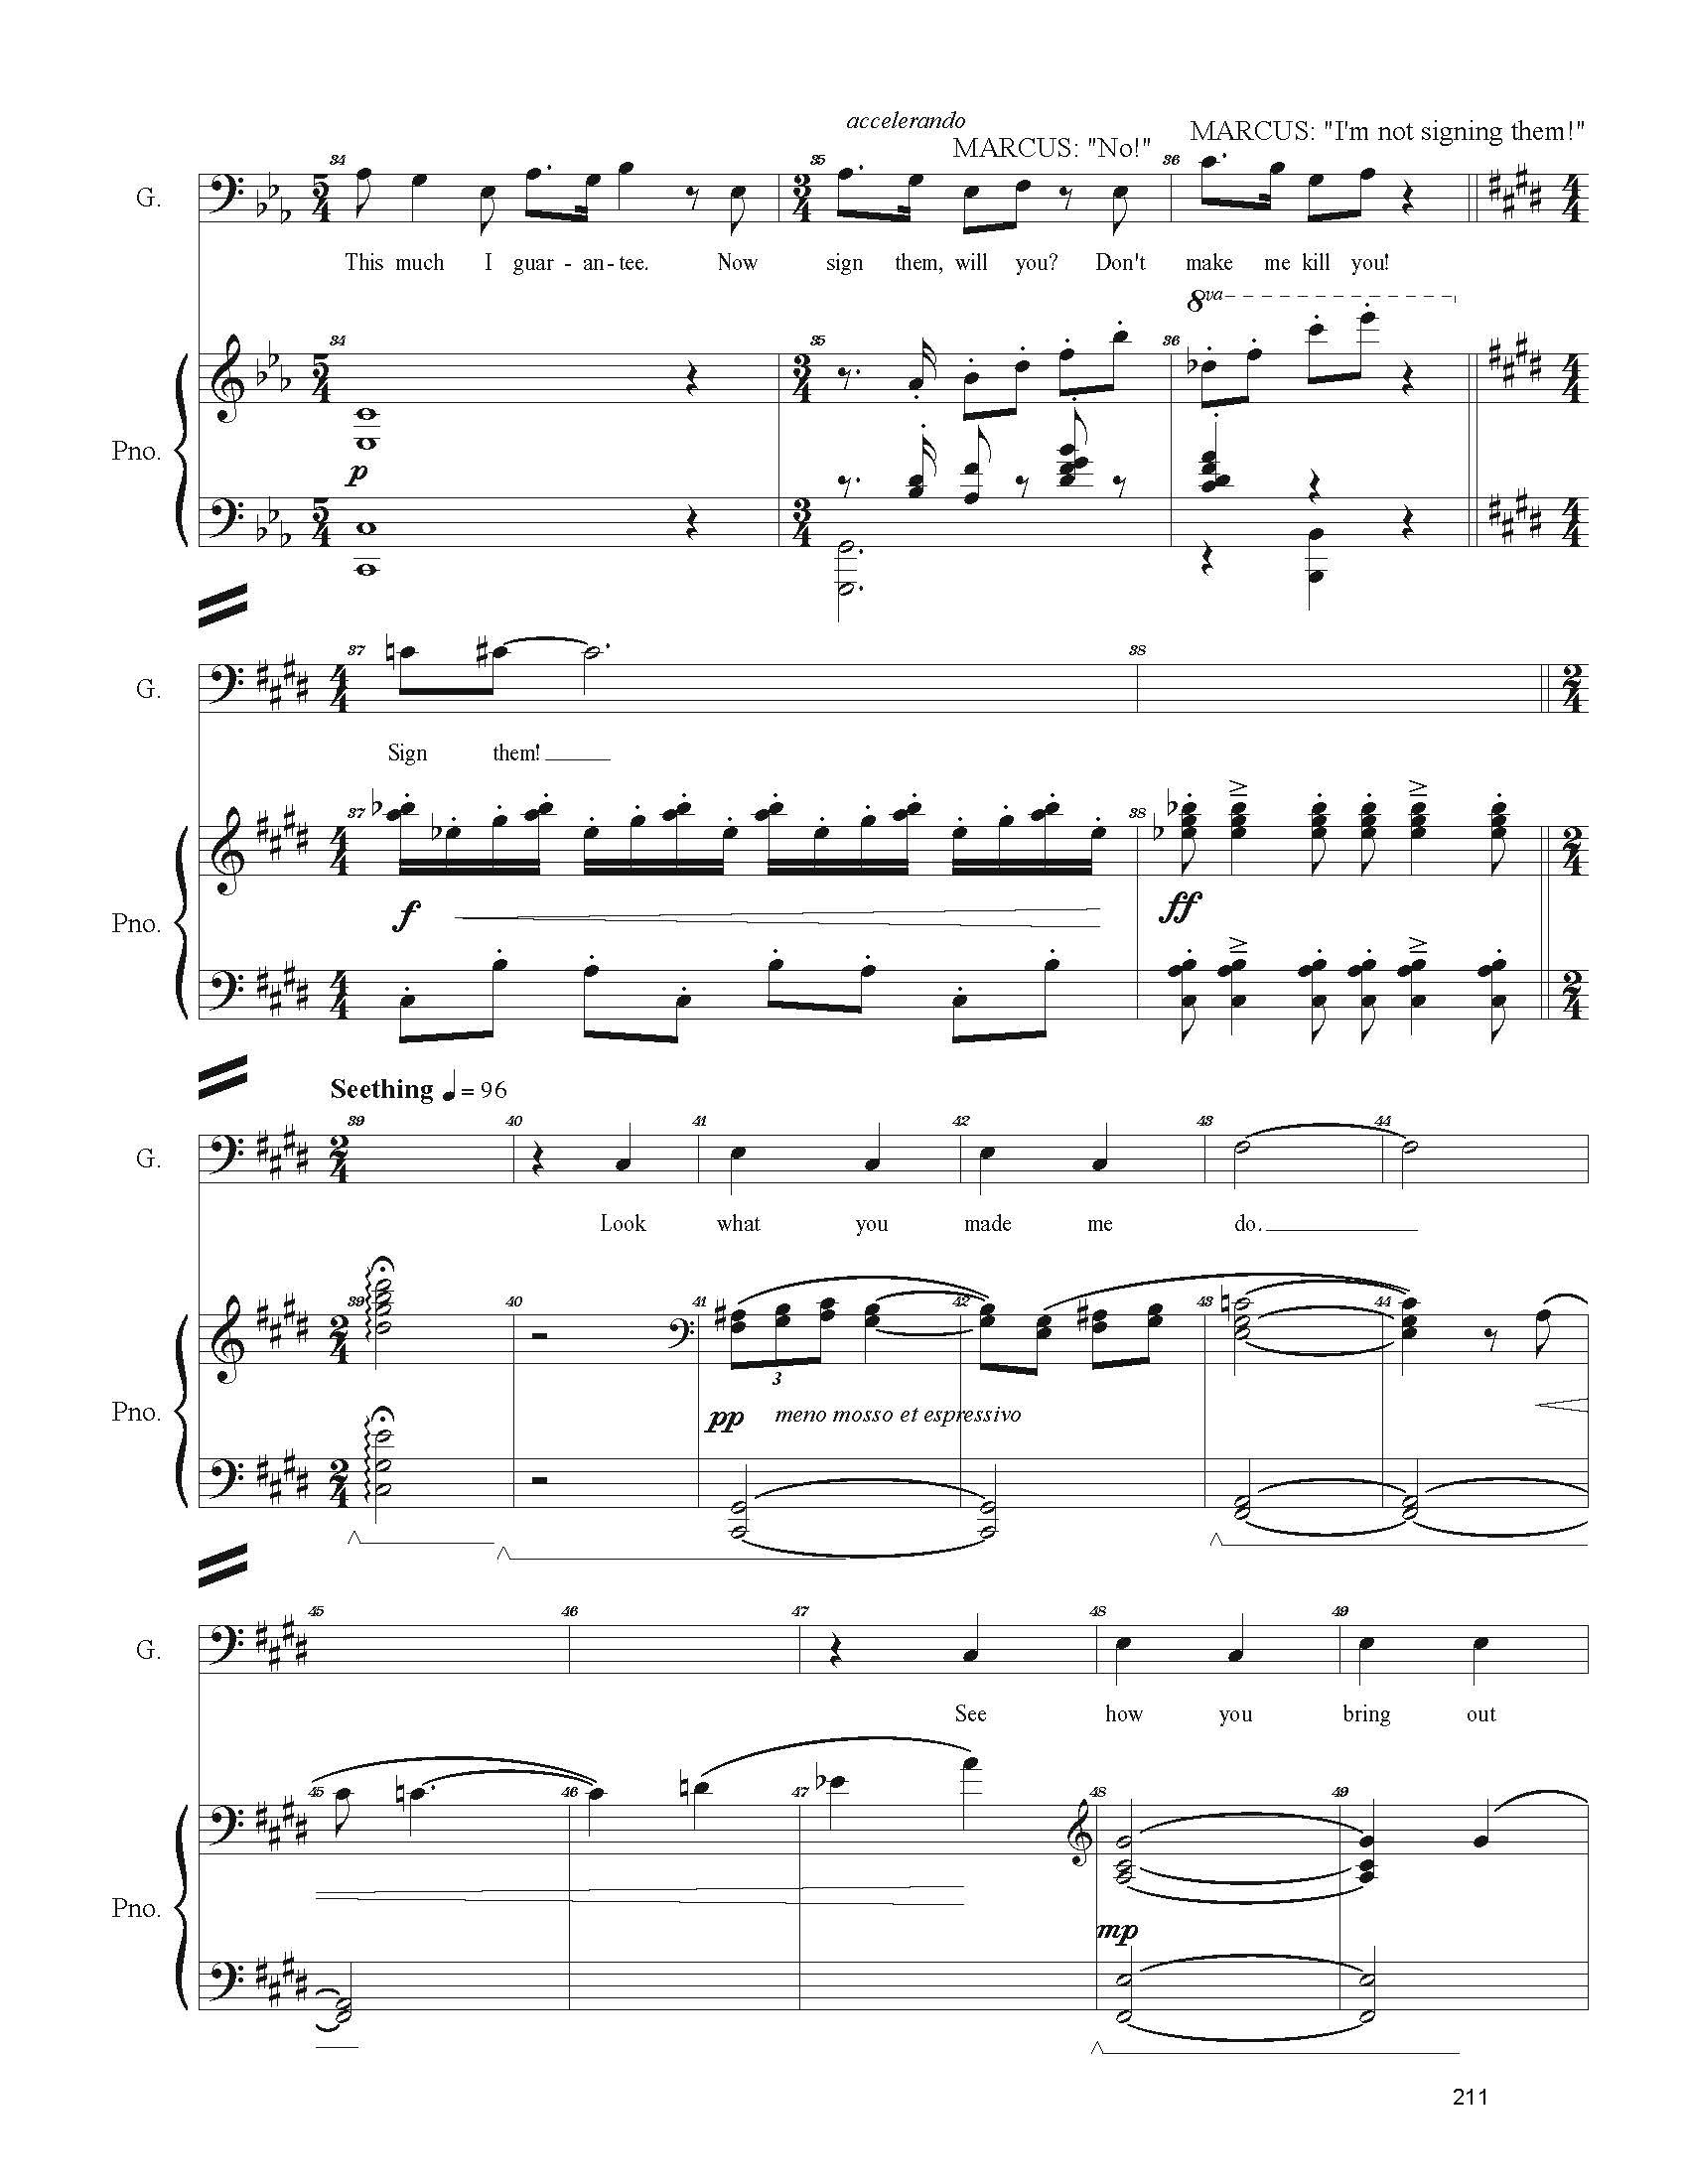 FULL PIANO VOCAL SCORE DRAFT 1 - Score_Page_211.jpg